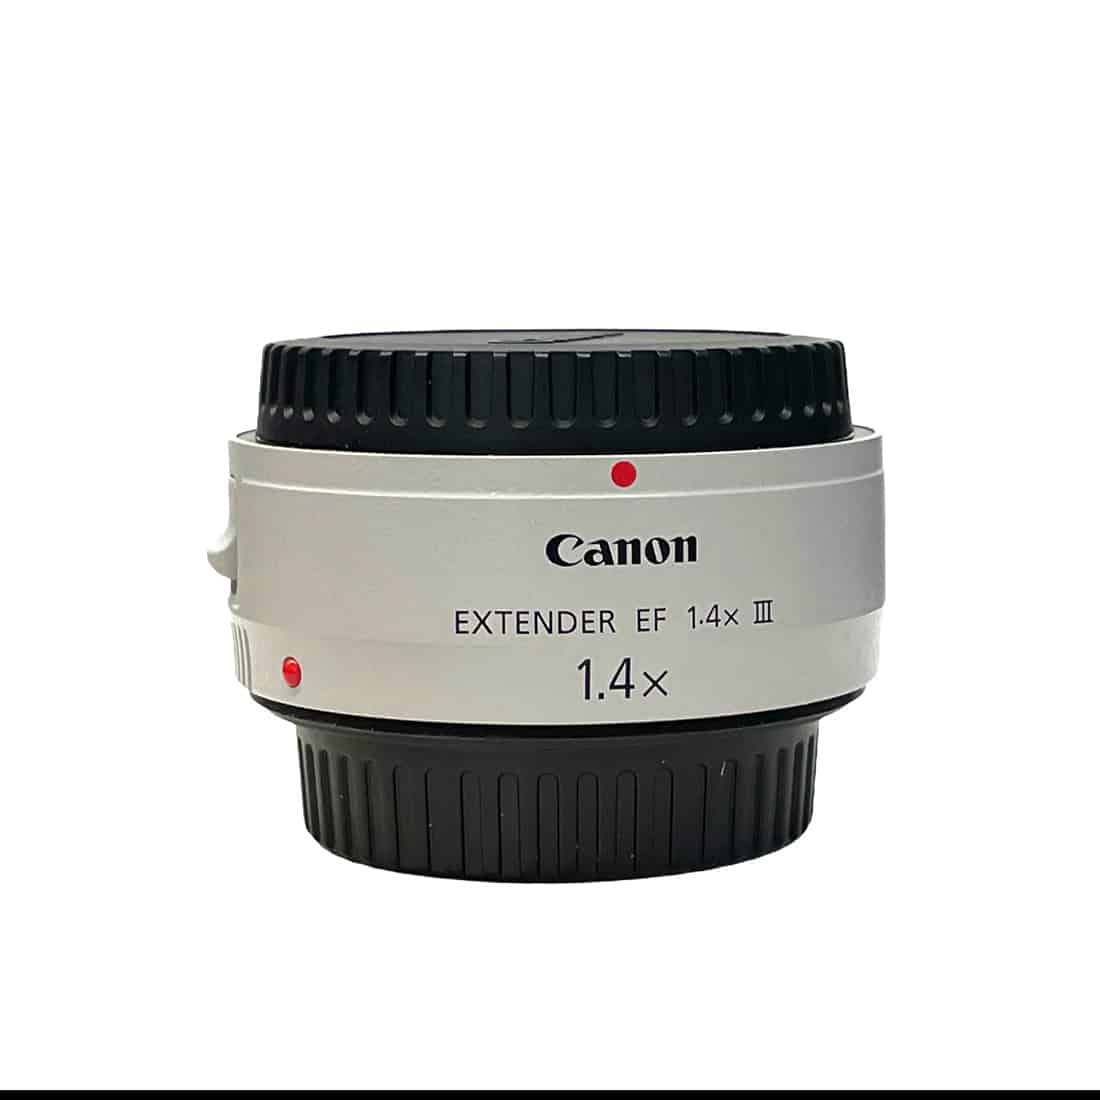 Vaihtolaite Canon Extender-ef14